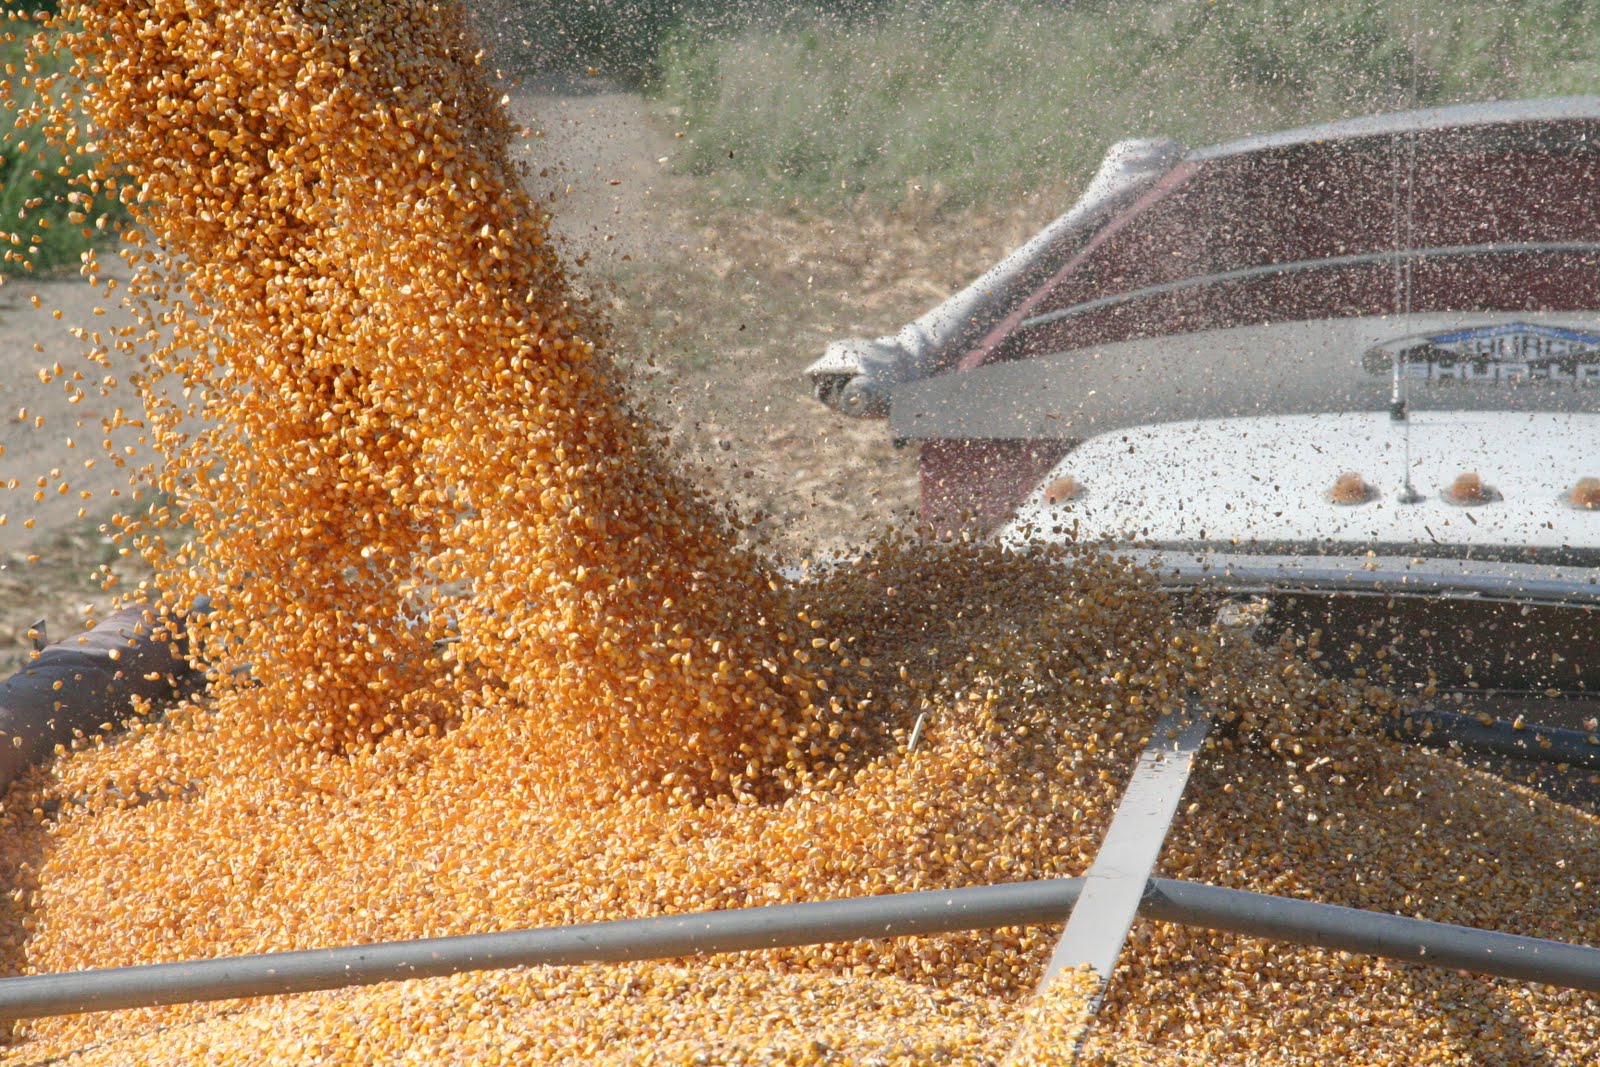 Carga de maiz desde silos al camion de transporte con destino a planta de alimento de cerdos